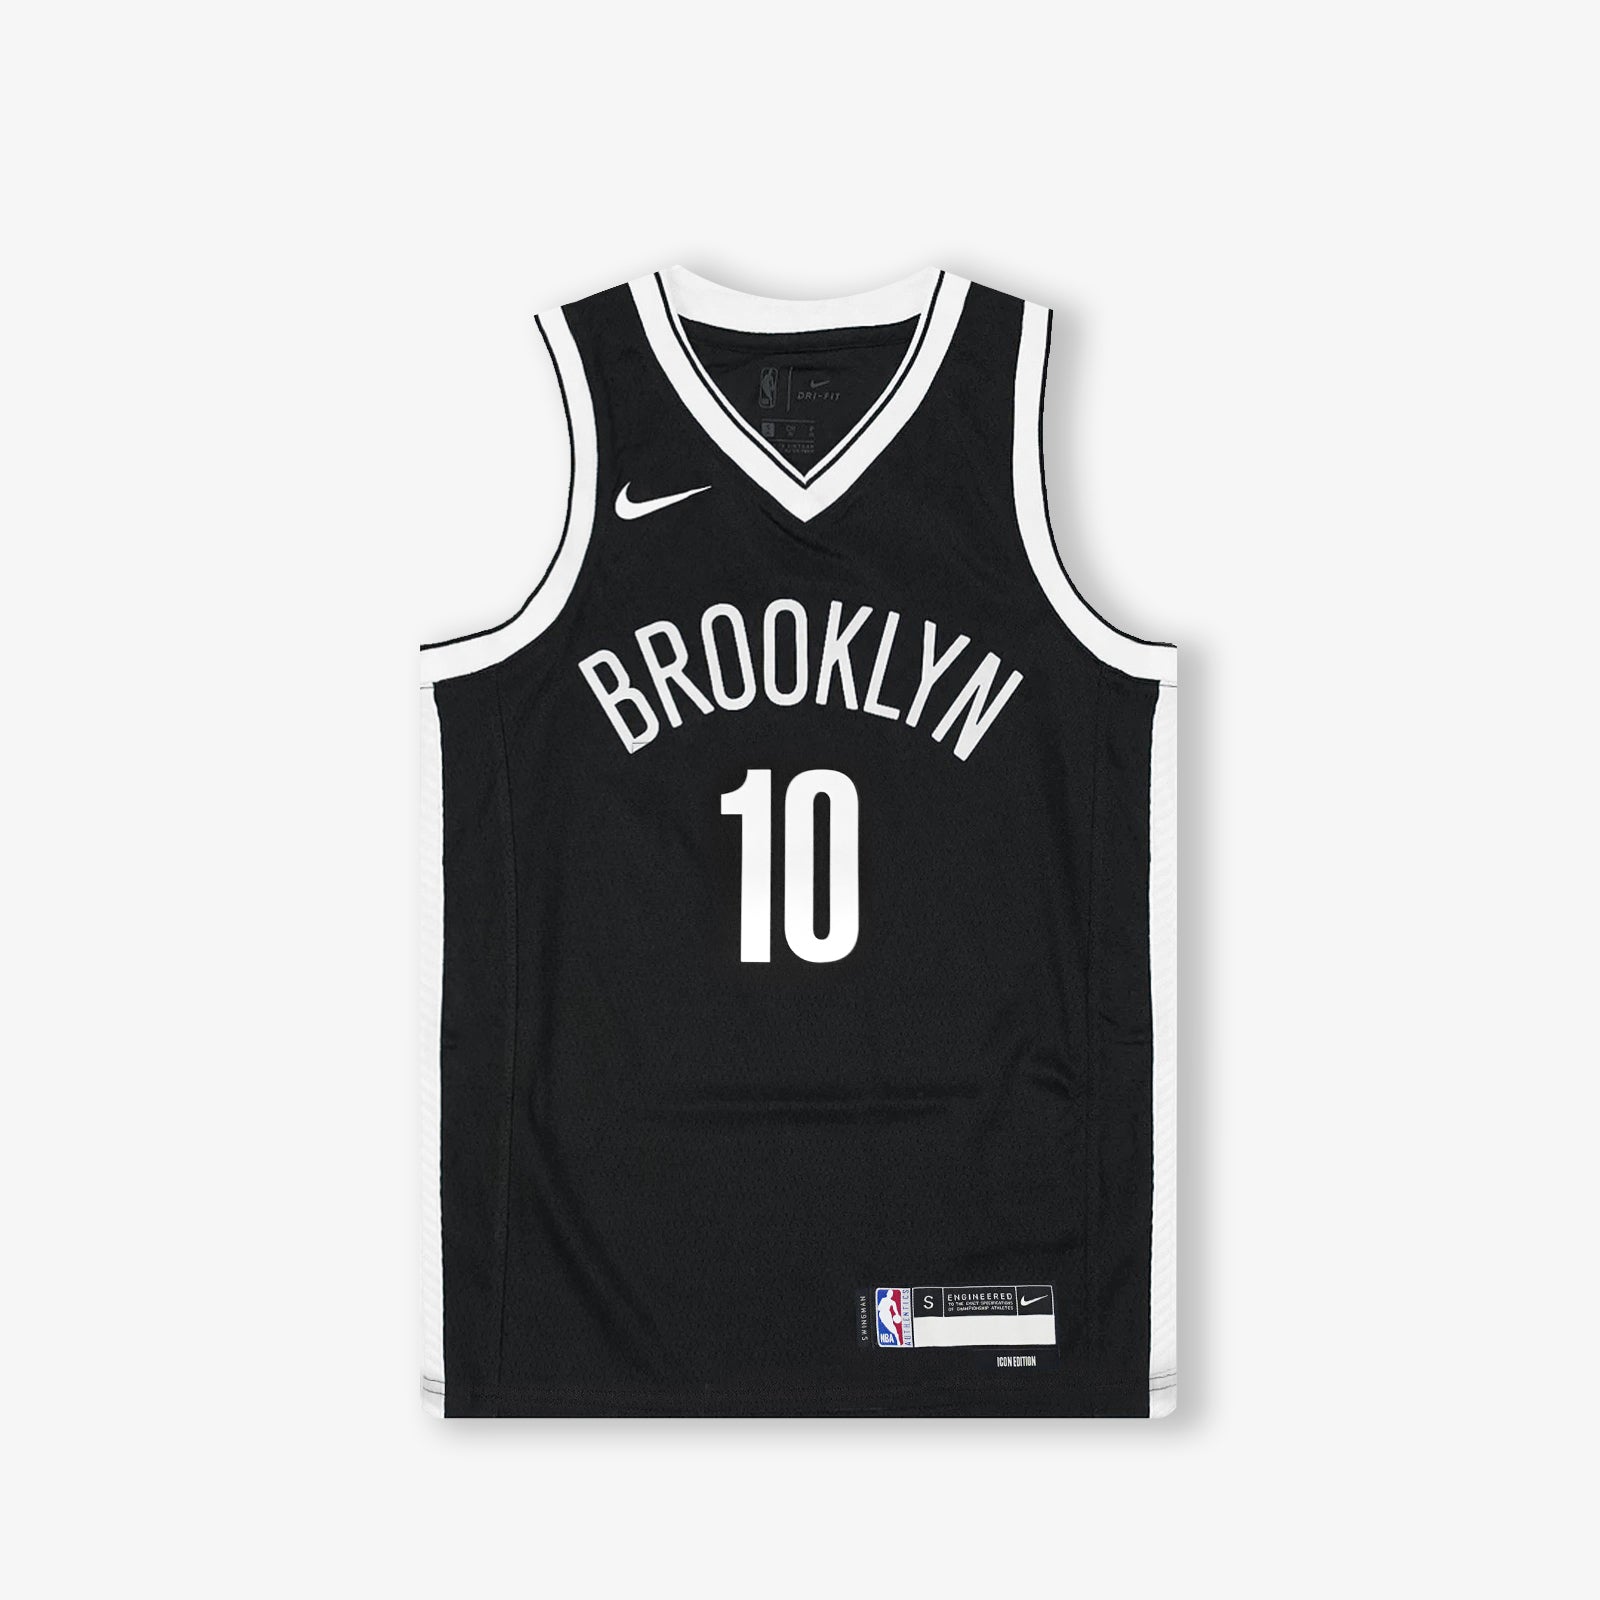 Outerstuff Brooklyn Nets Big Boys and Girls Icon Swingman Jersey